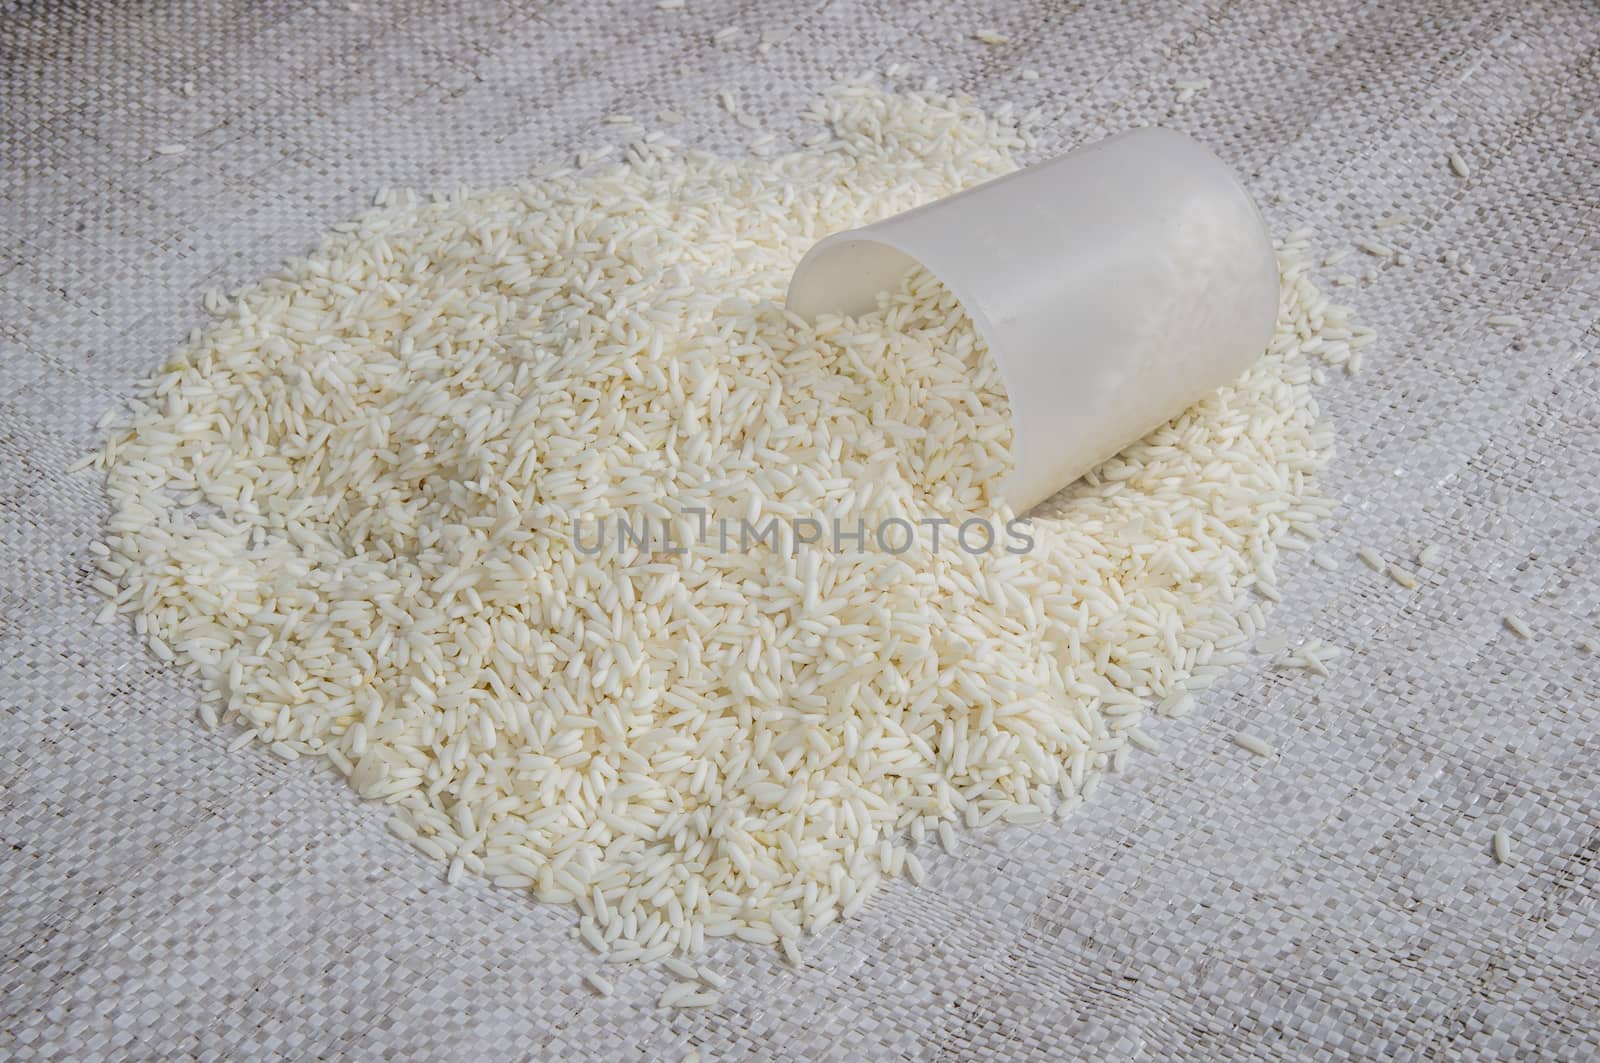 Rice by seksan44